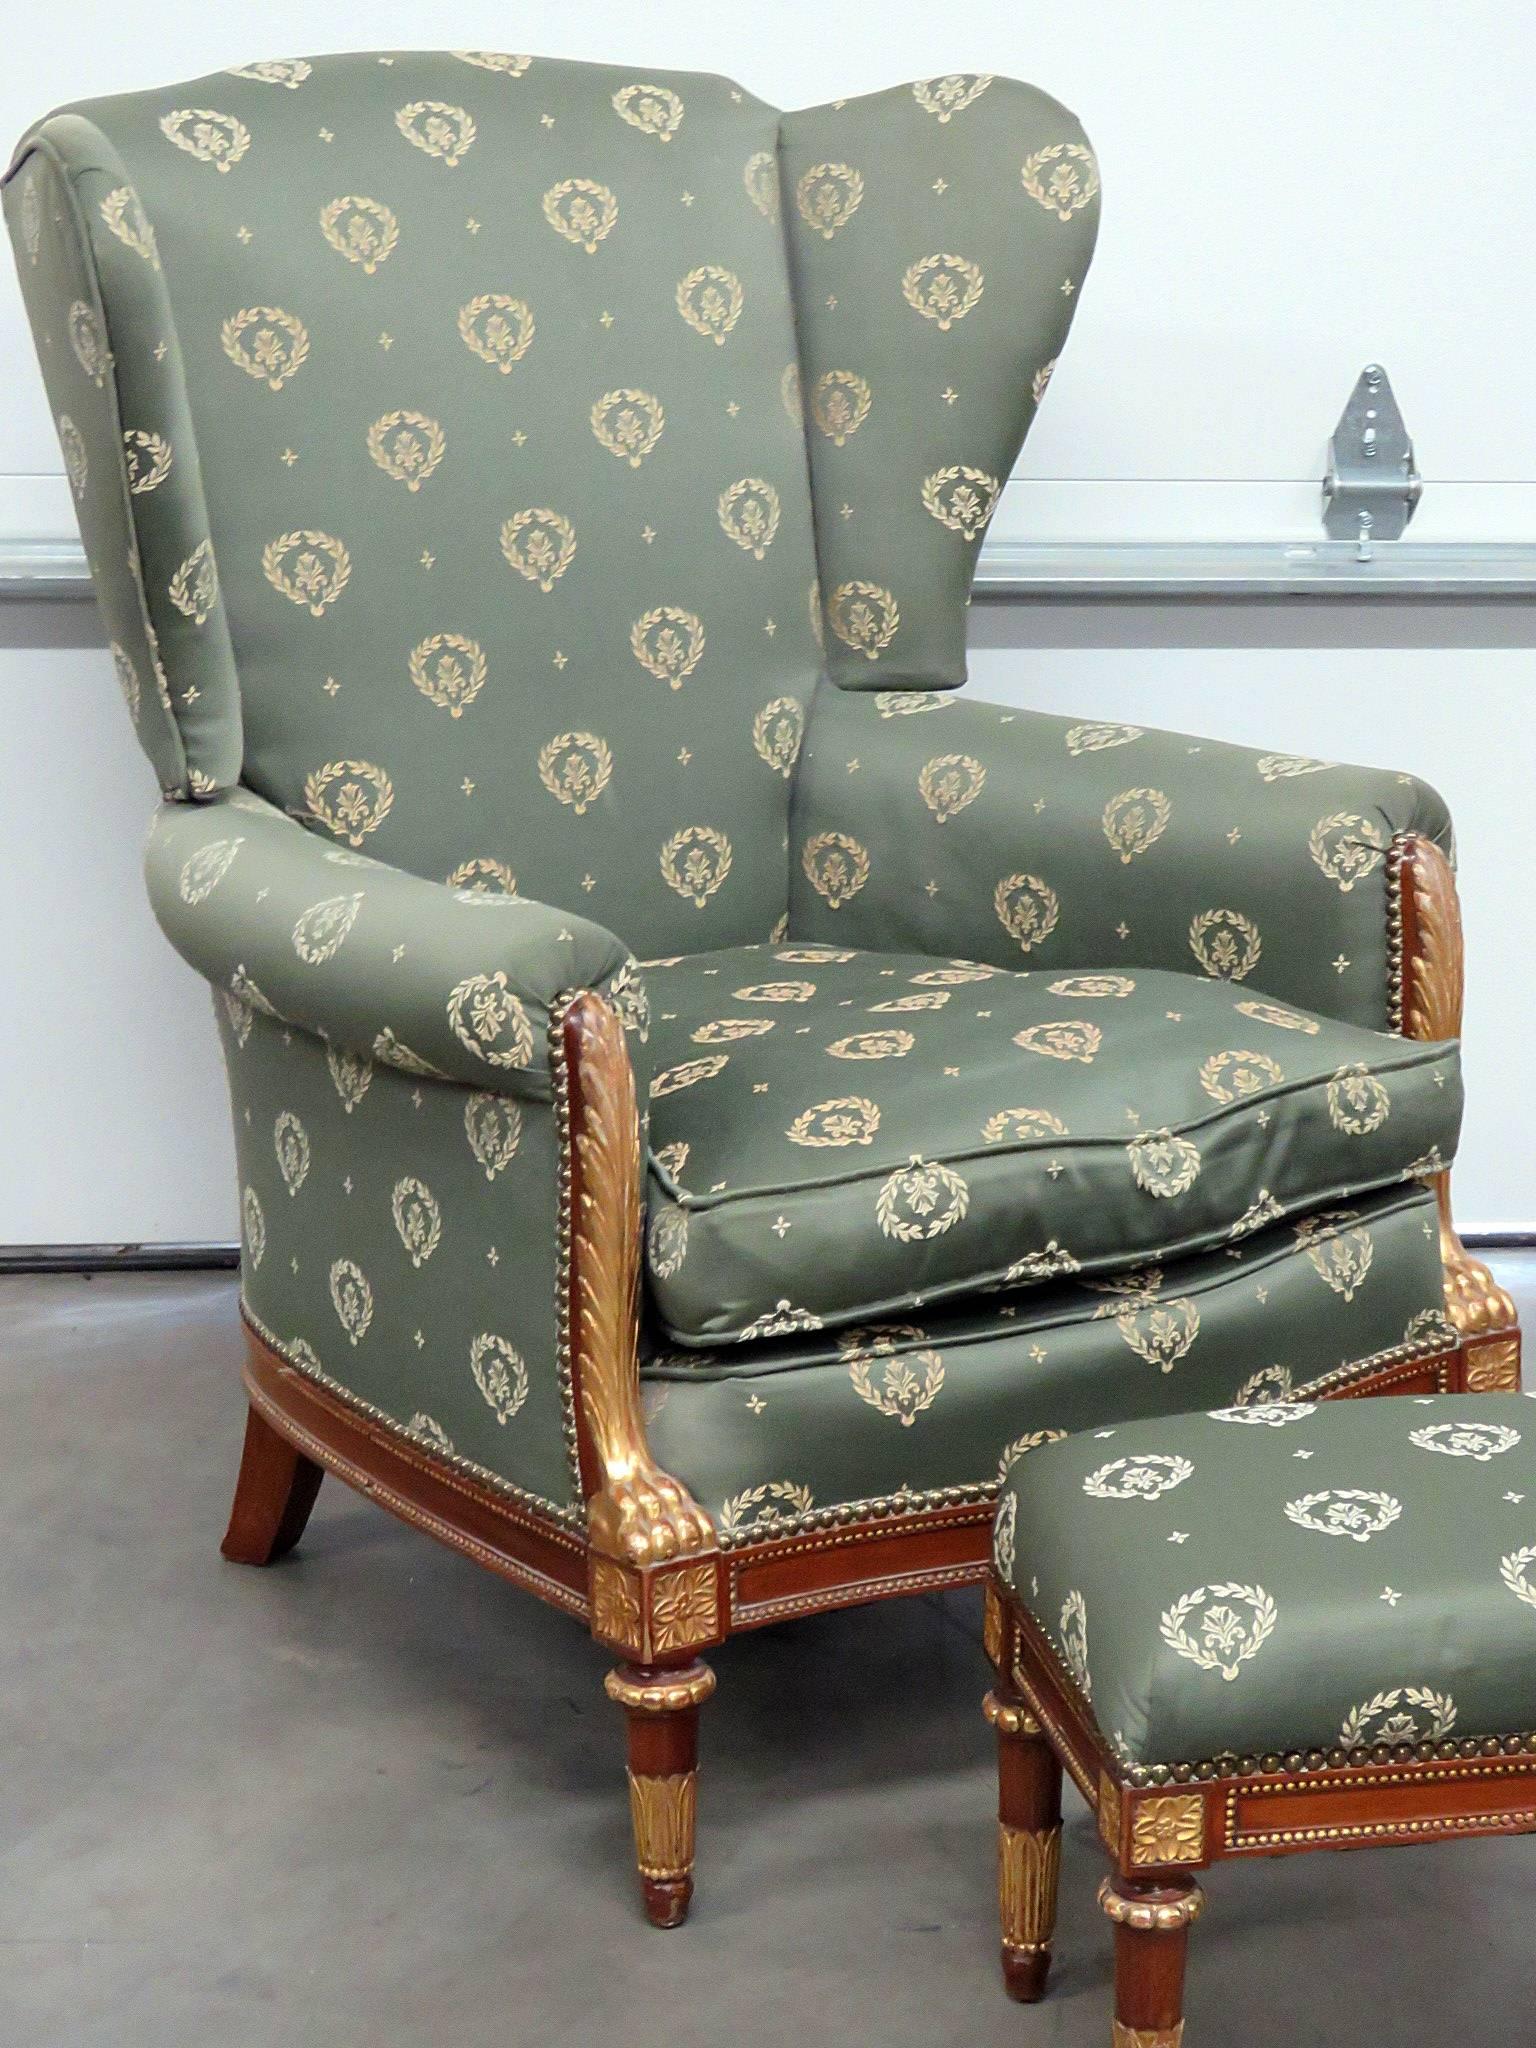 Jansen Regency style chair and ottoman. Nailhead trim with gilt decor. Measures: 18.5